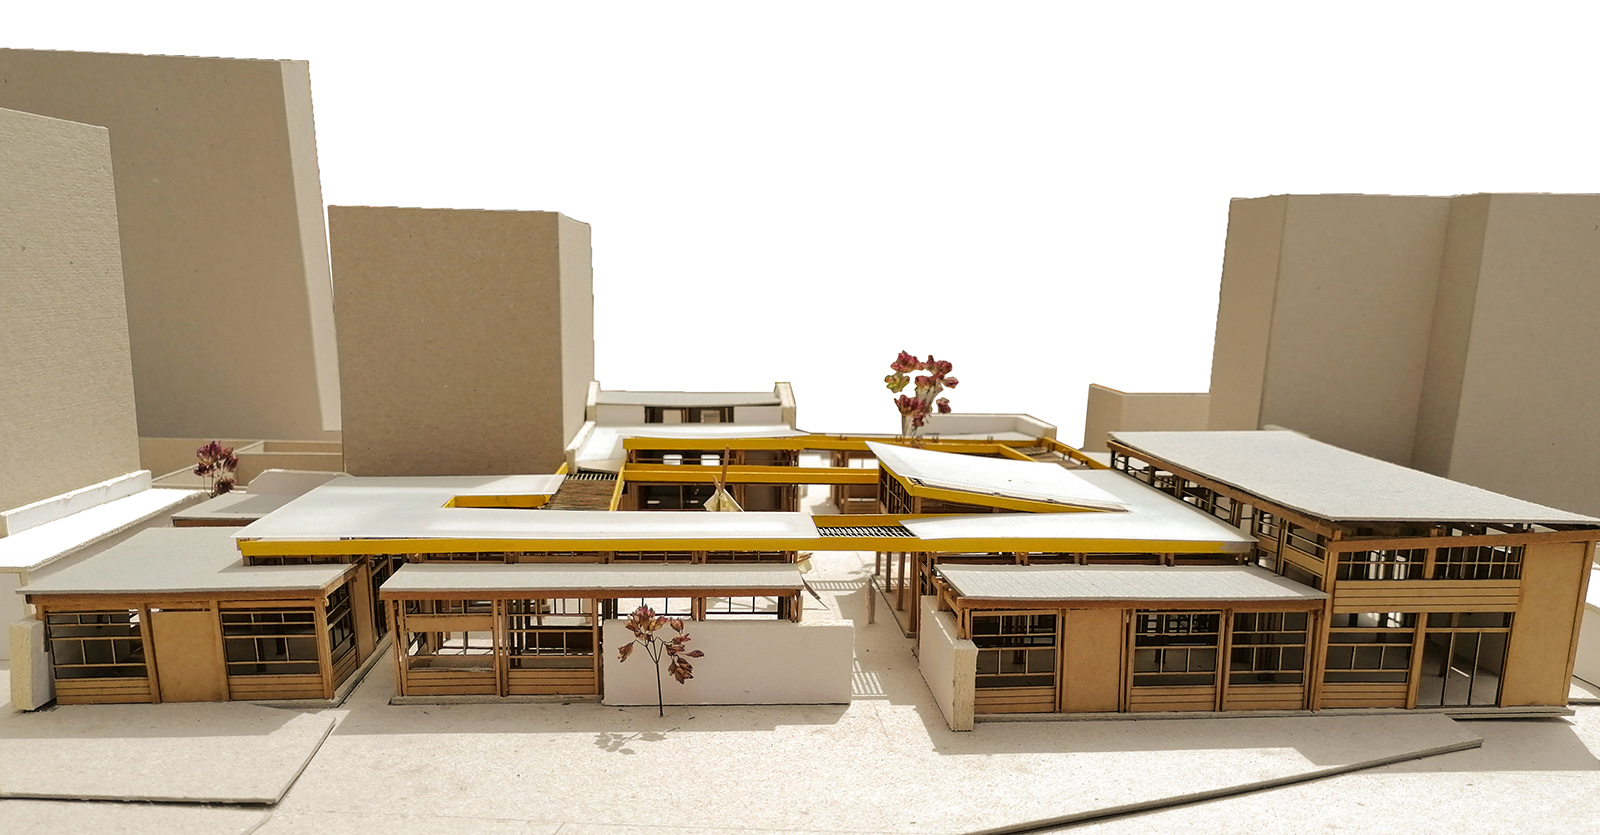 Archisearch Cooperative Construction Centre in Metaxourgeio, Athens | Diploma thesis project by Athina Maria Georgiadi, Thalassini Karali & Ourania Agoranou